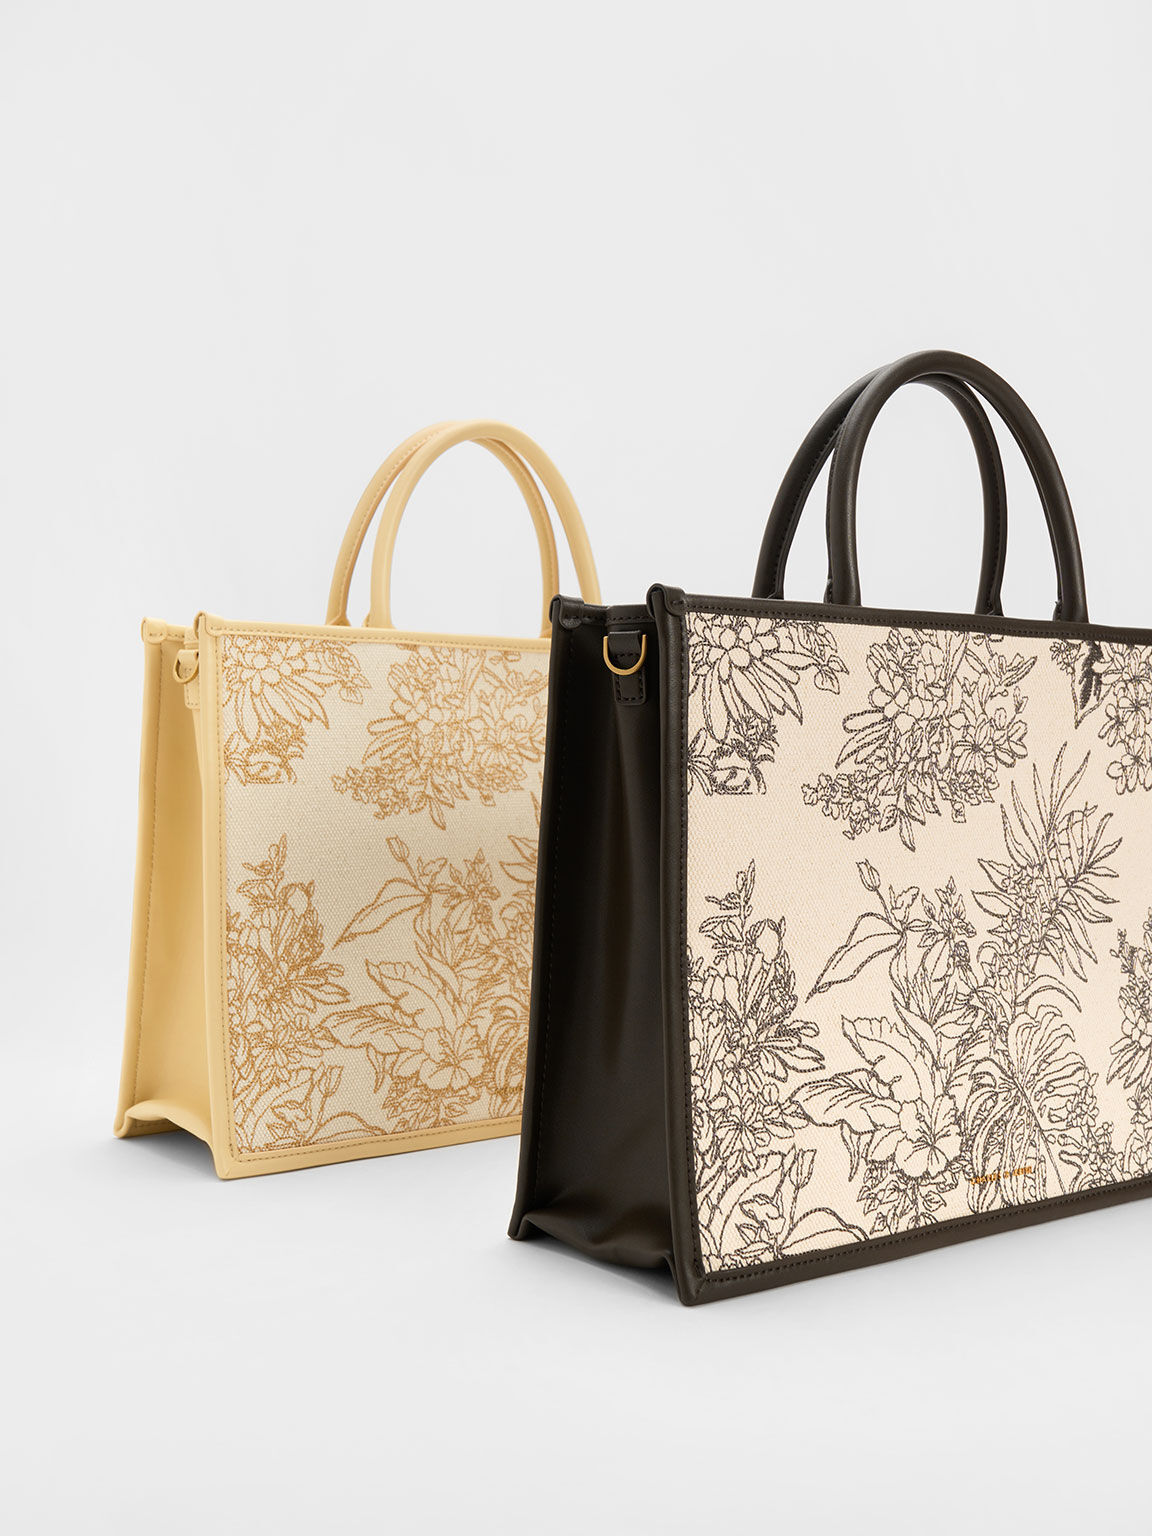 Floral Illustrated Canvas Tote Bag - Beige